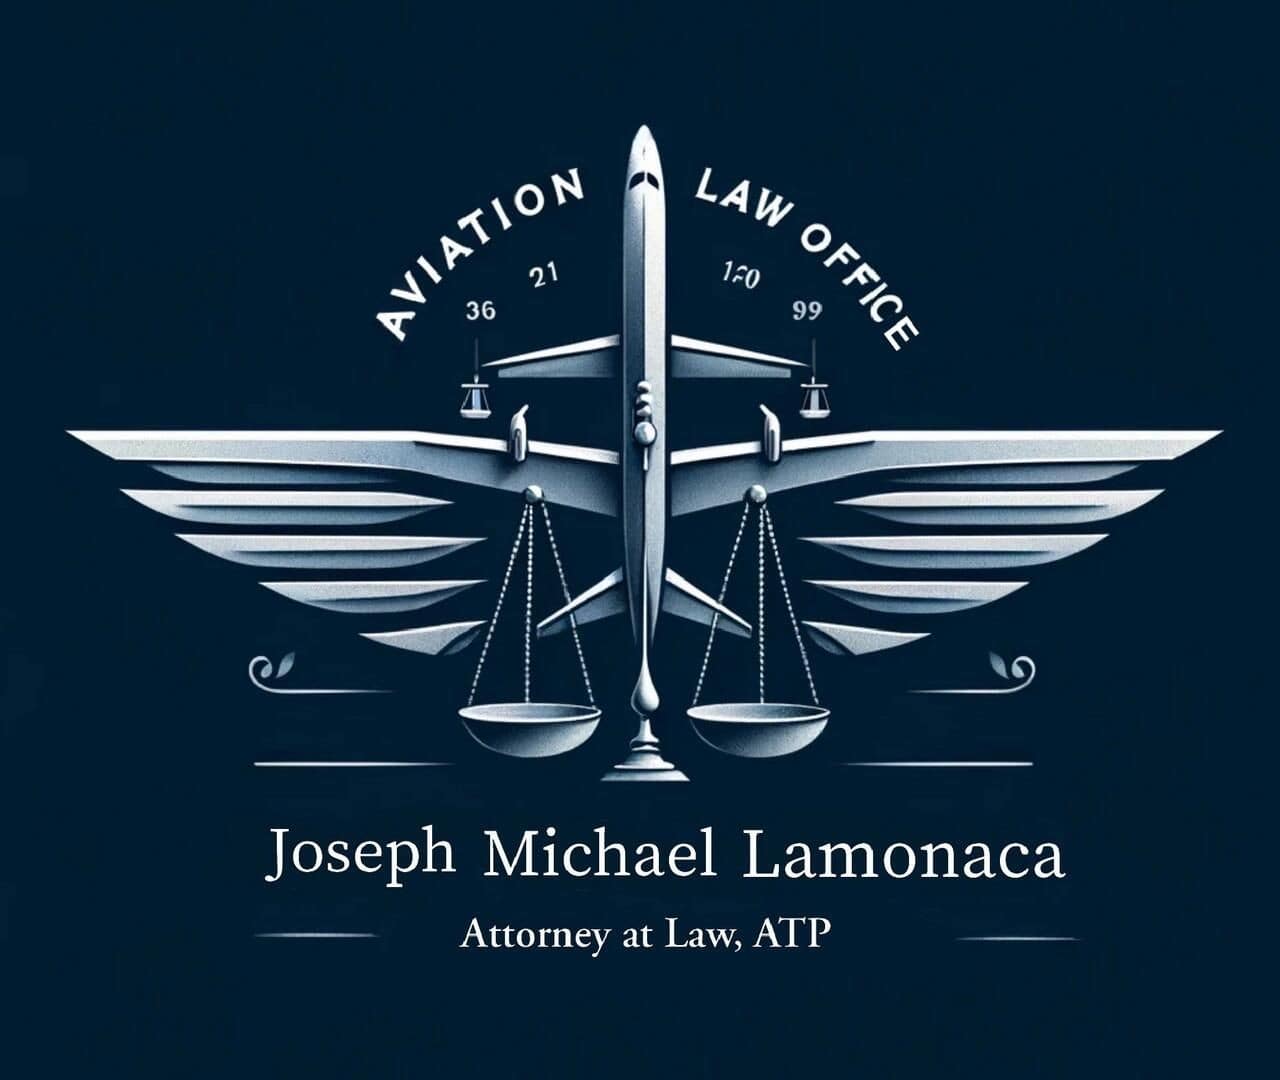 National Aviation Law Office of Joseph Michael Lamonaca, Attorney at Law, ATP